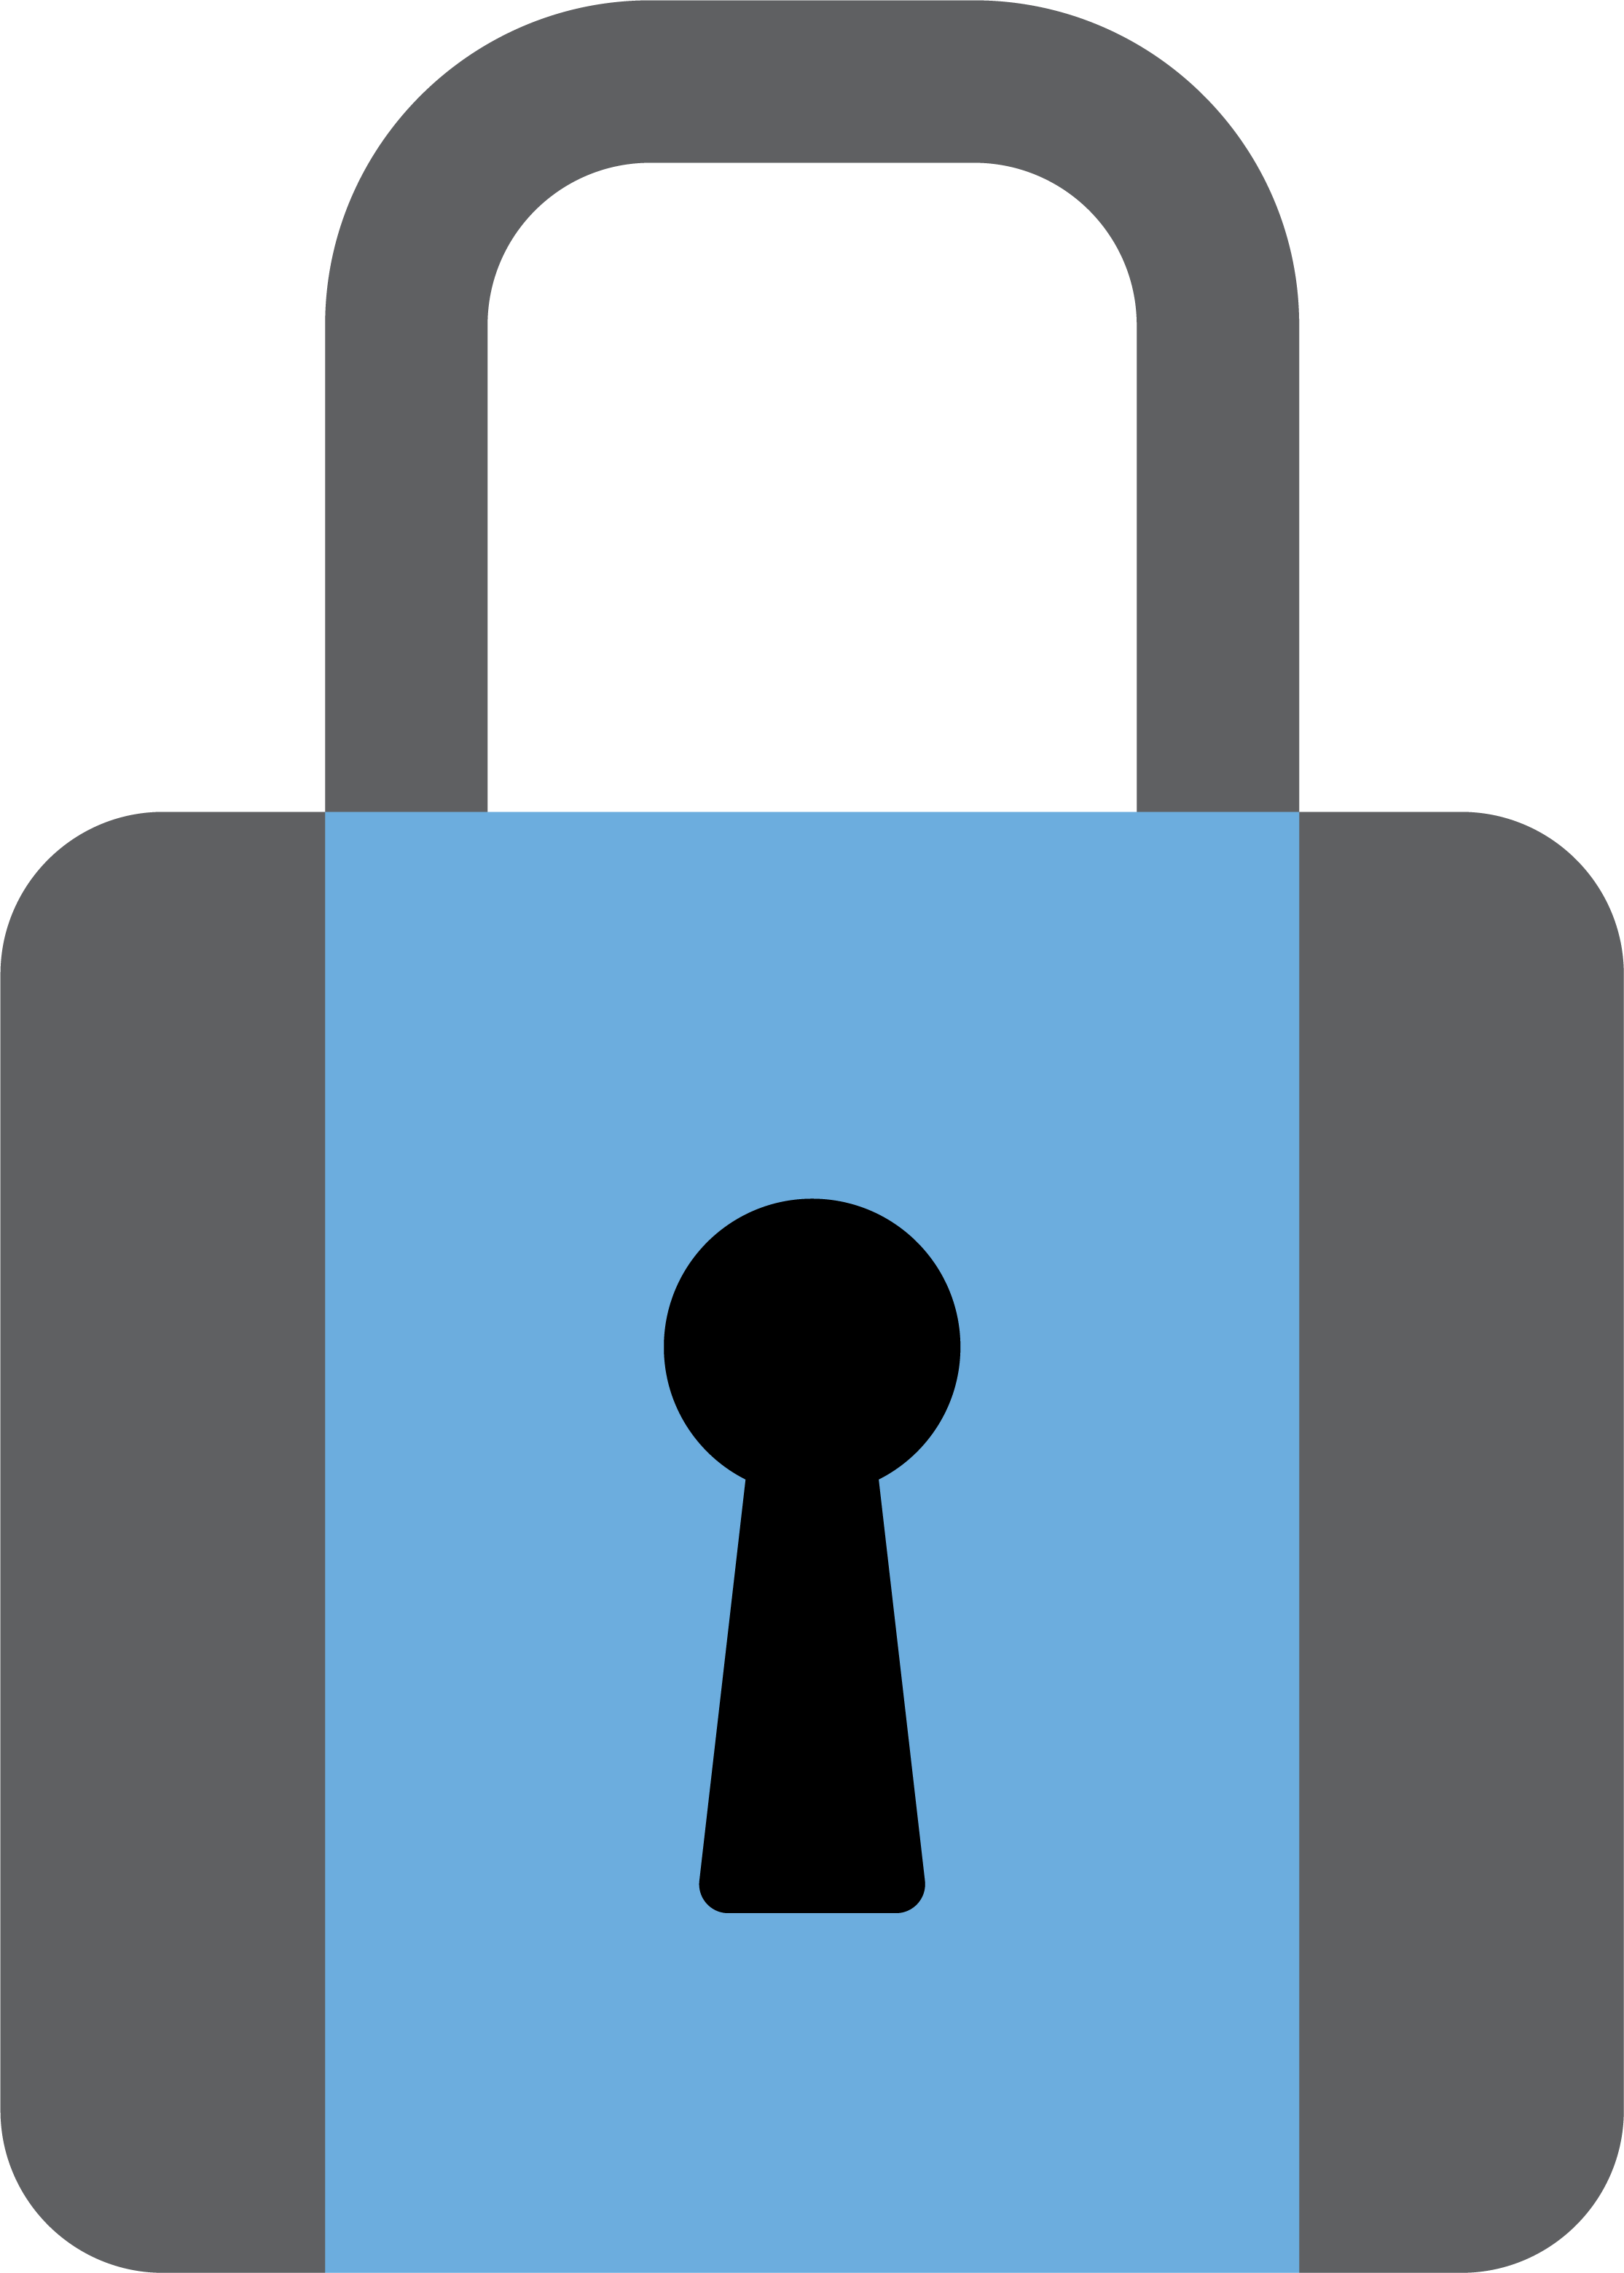 Graphic: School Security (Lock)